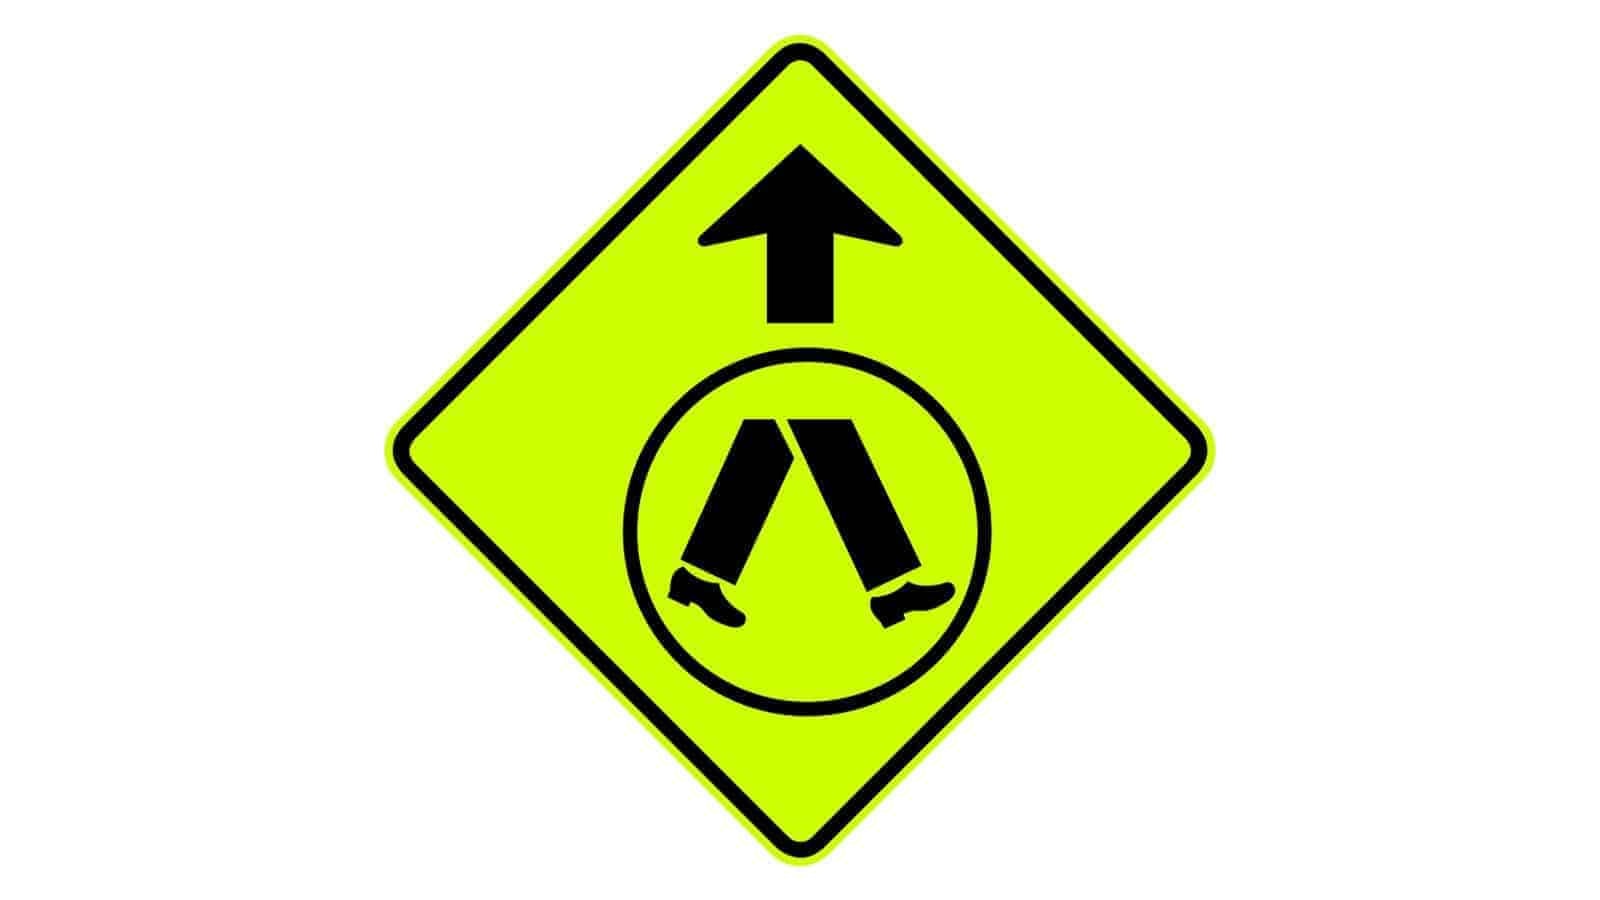 Pedestrian Crossing Ahead Sign